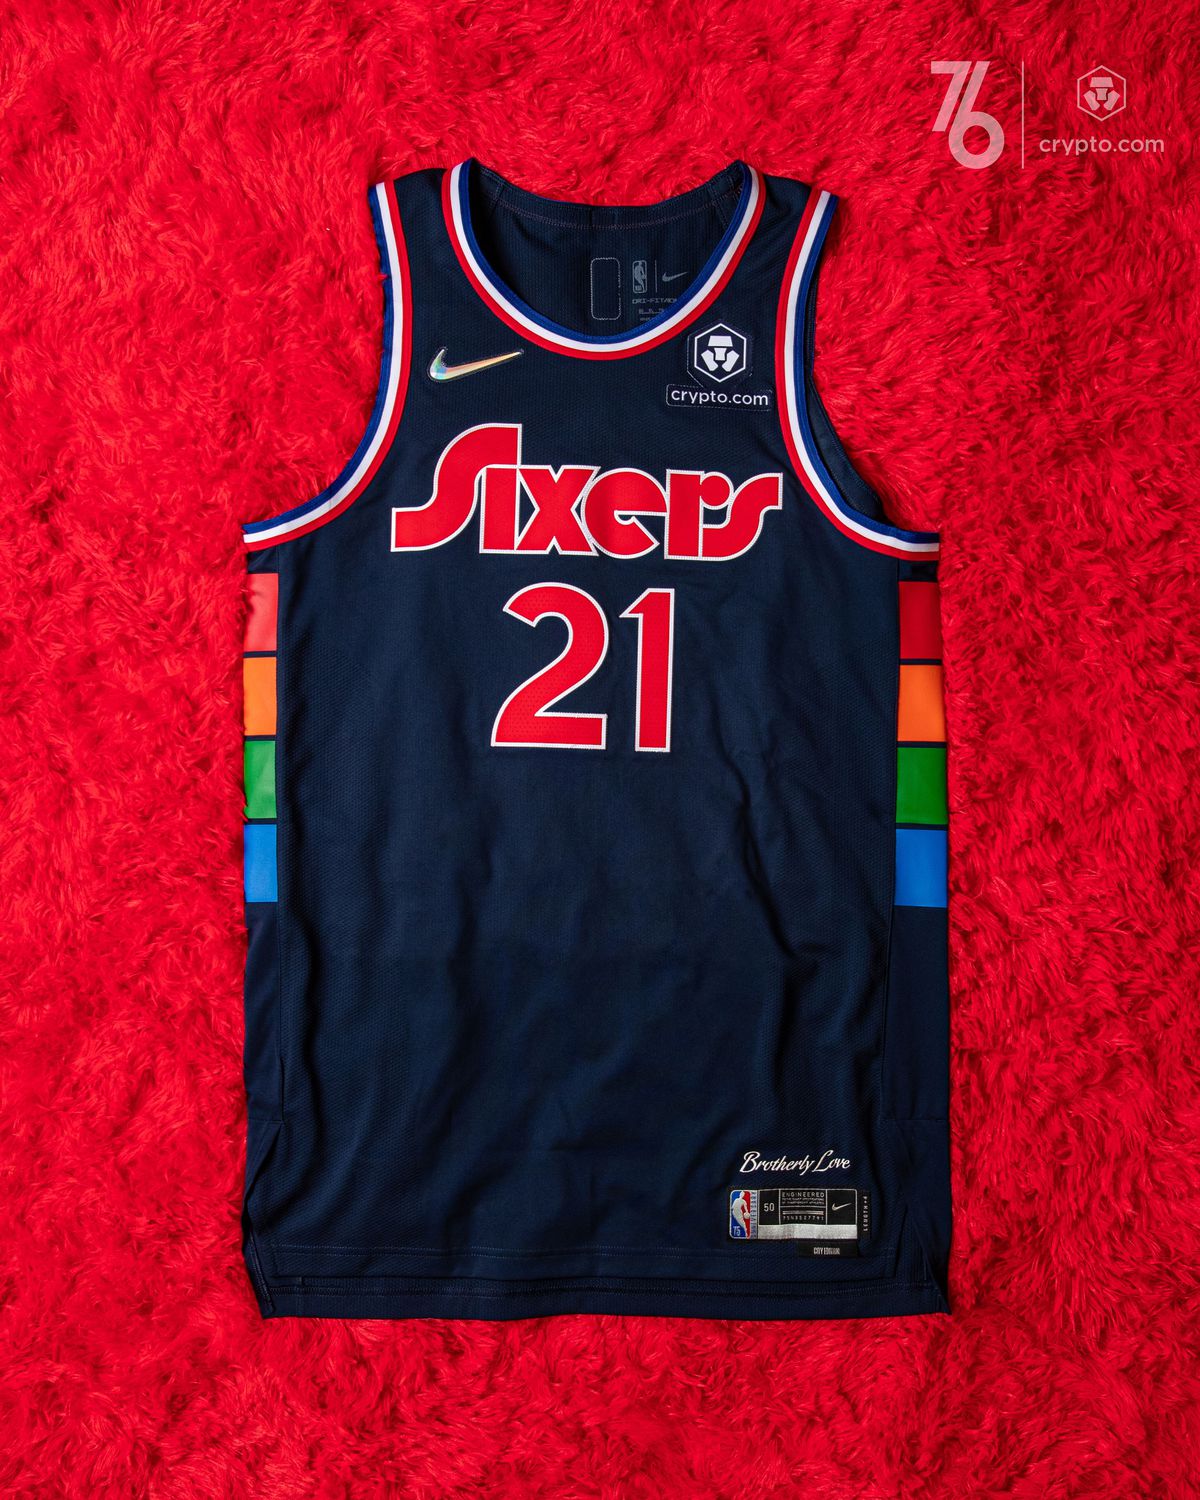 76ers rainbow jersey